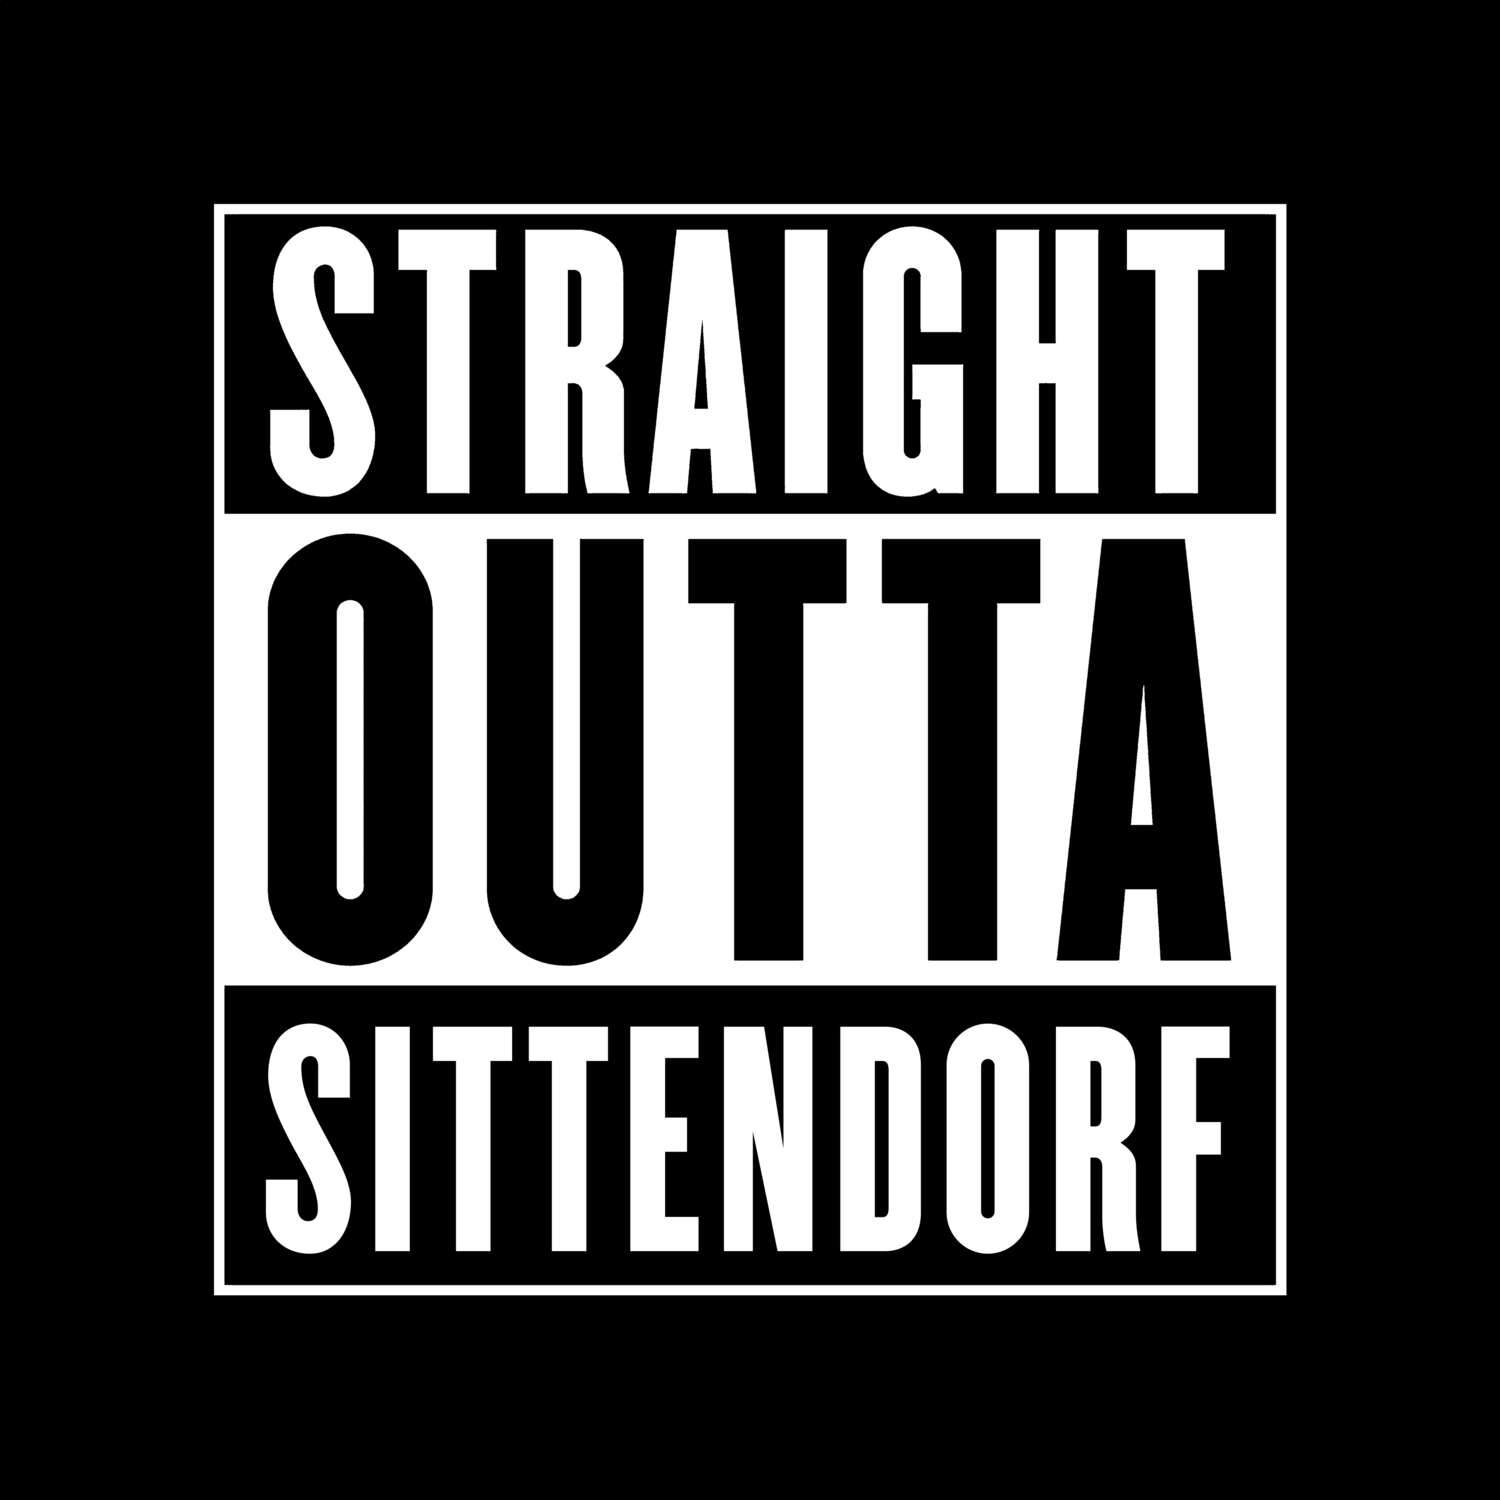 Sittendorf T-Shirt »Straight Outta«